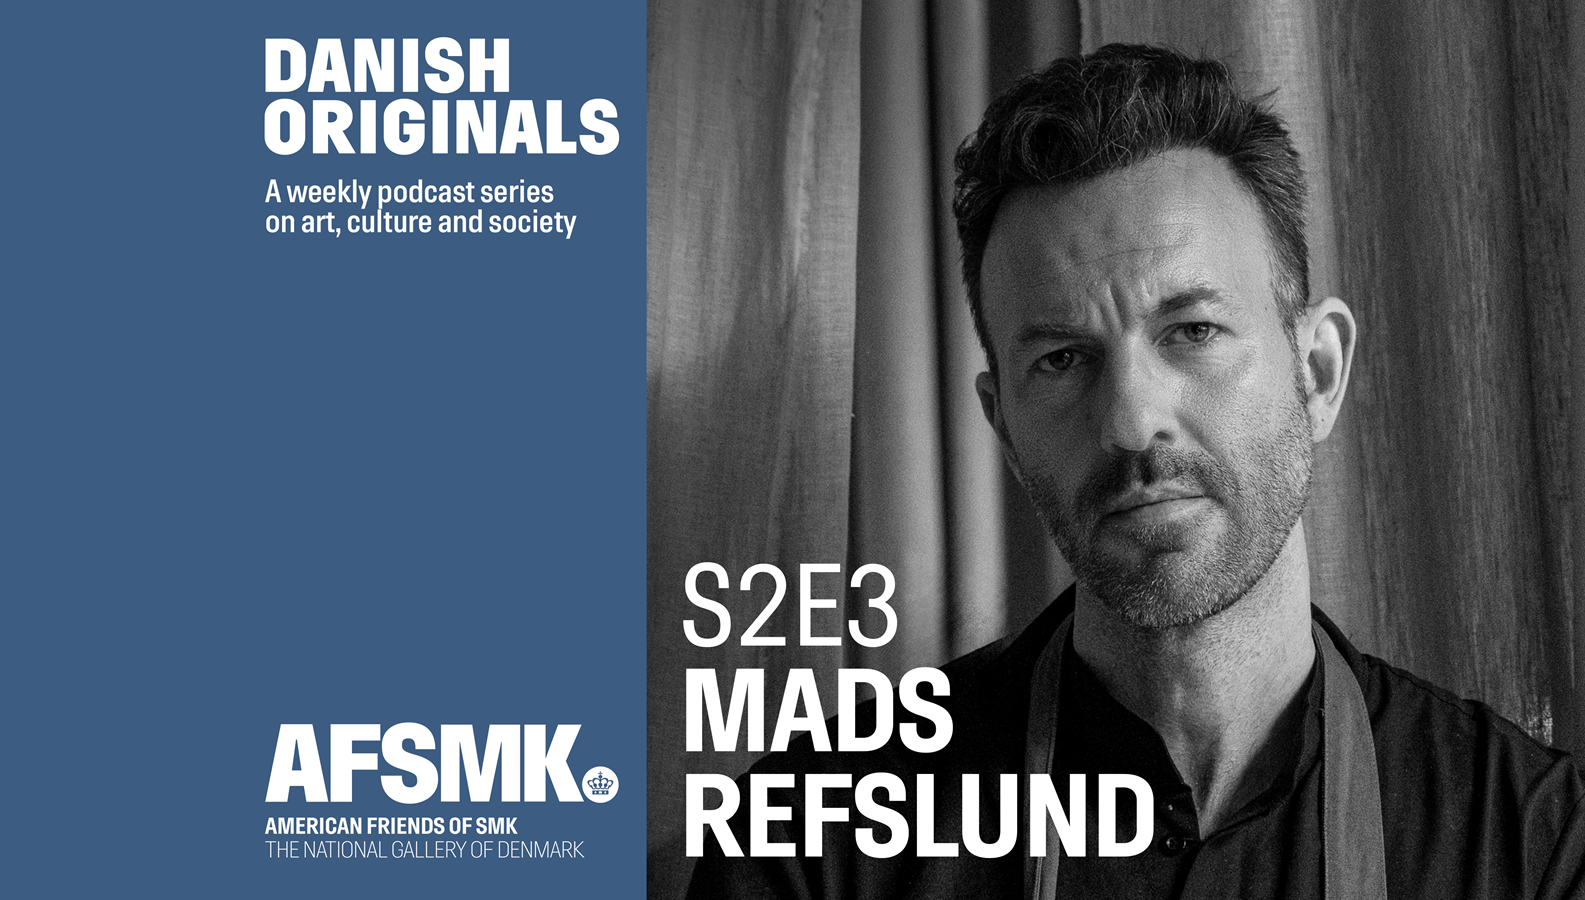 Danish Originals S2 E3: Mads Refslund